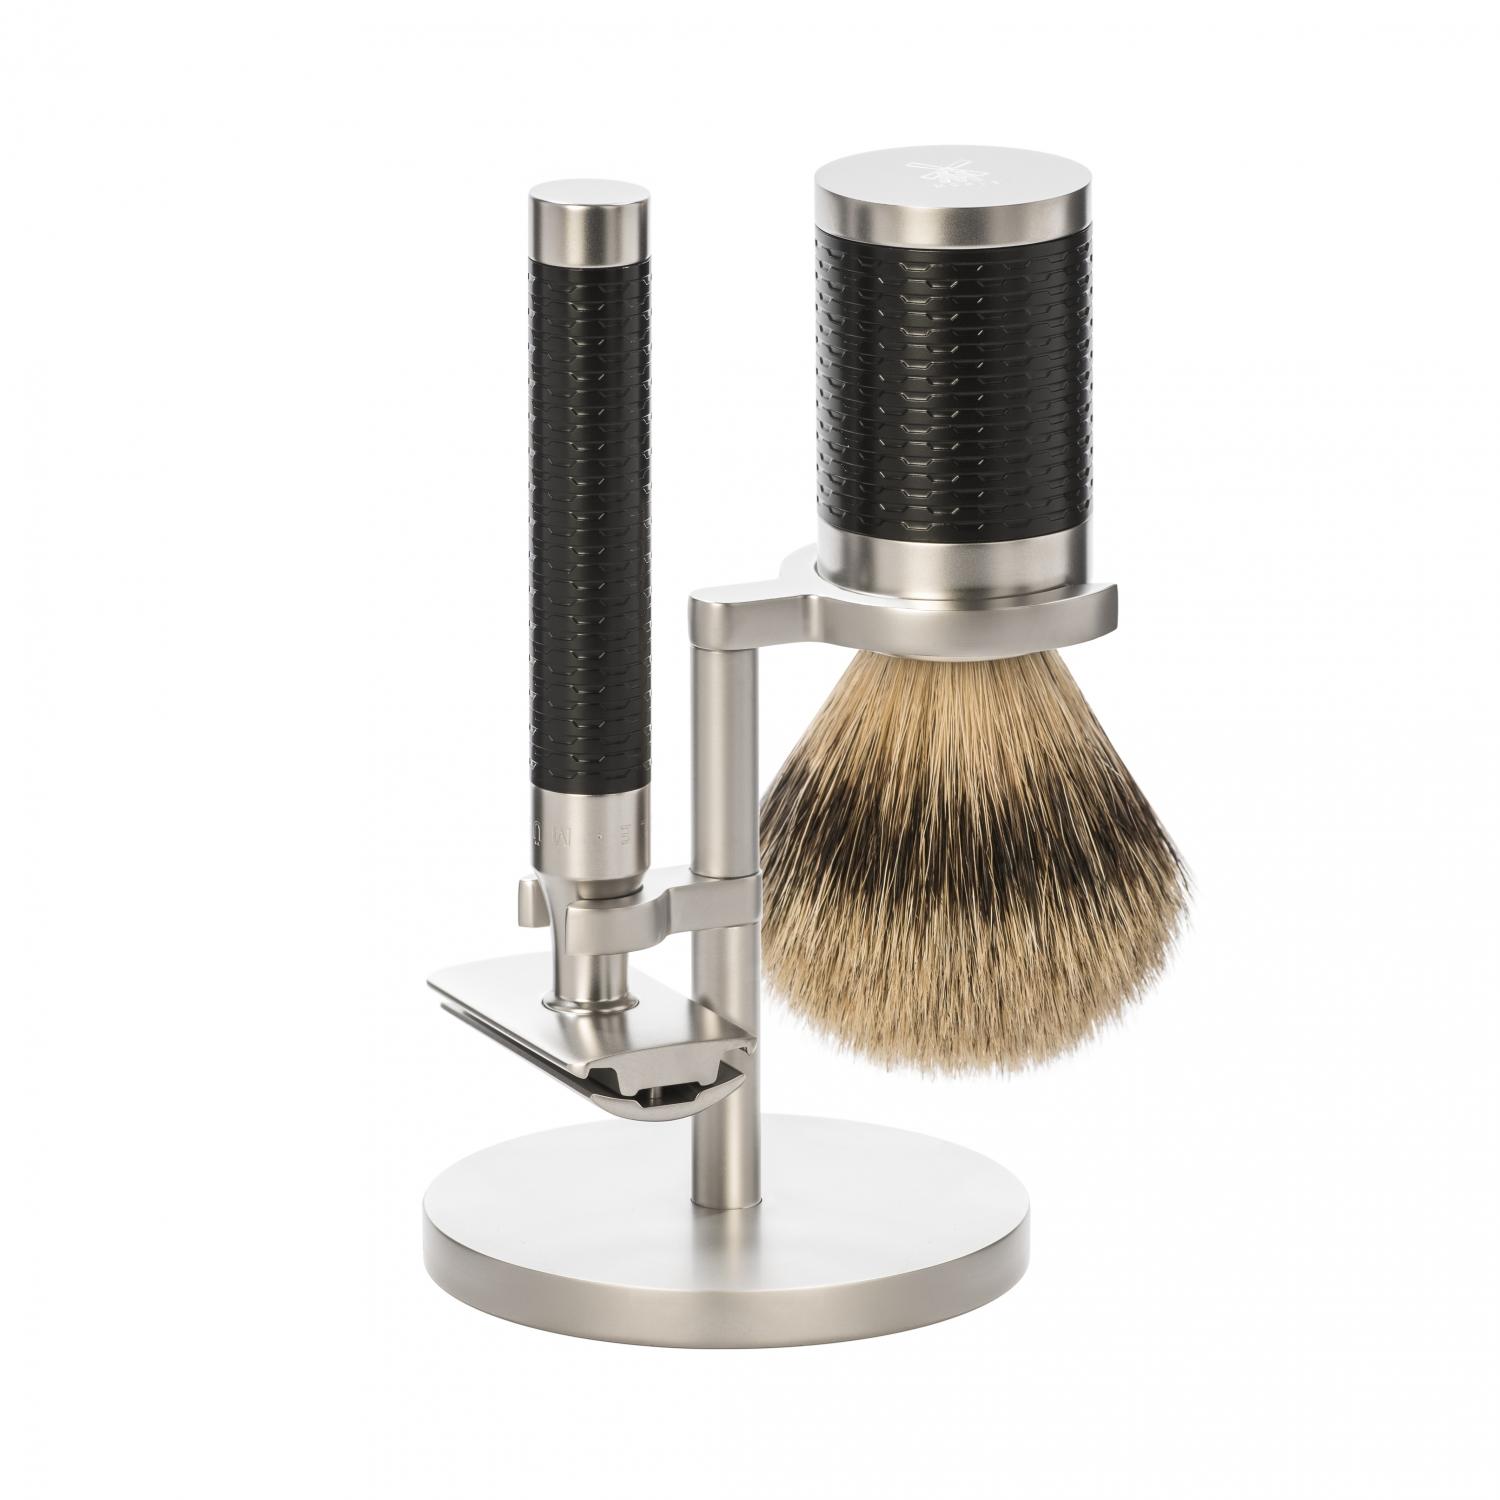 Shaving set from MÜHLE, silvertip badger, handle material stainless steel/black.